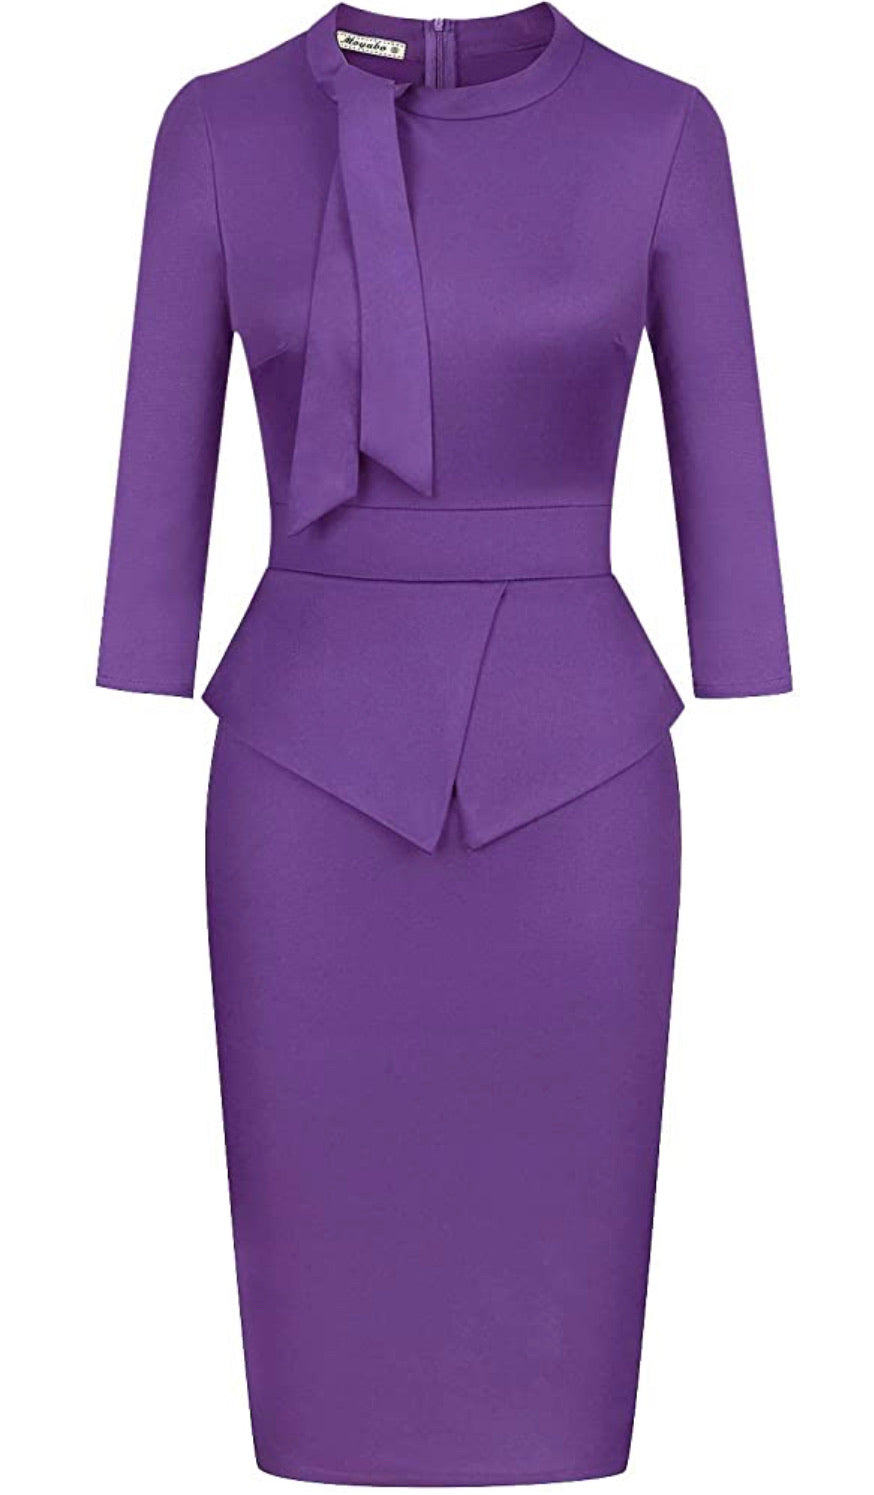 Vintage Inspired Peplum Dress (Sizes Small - 2XLarge) Purple